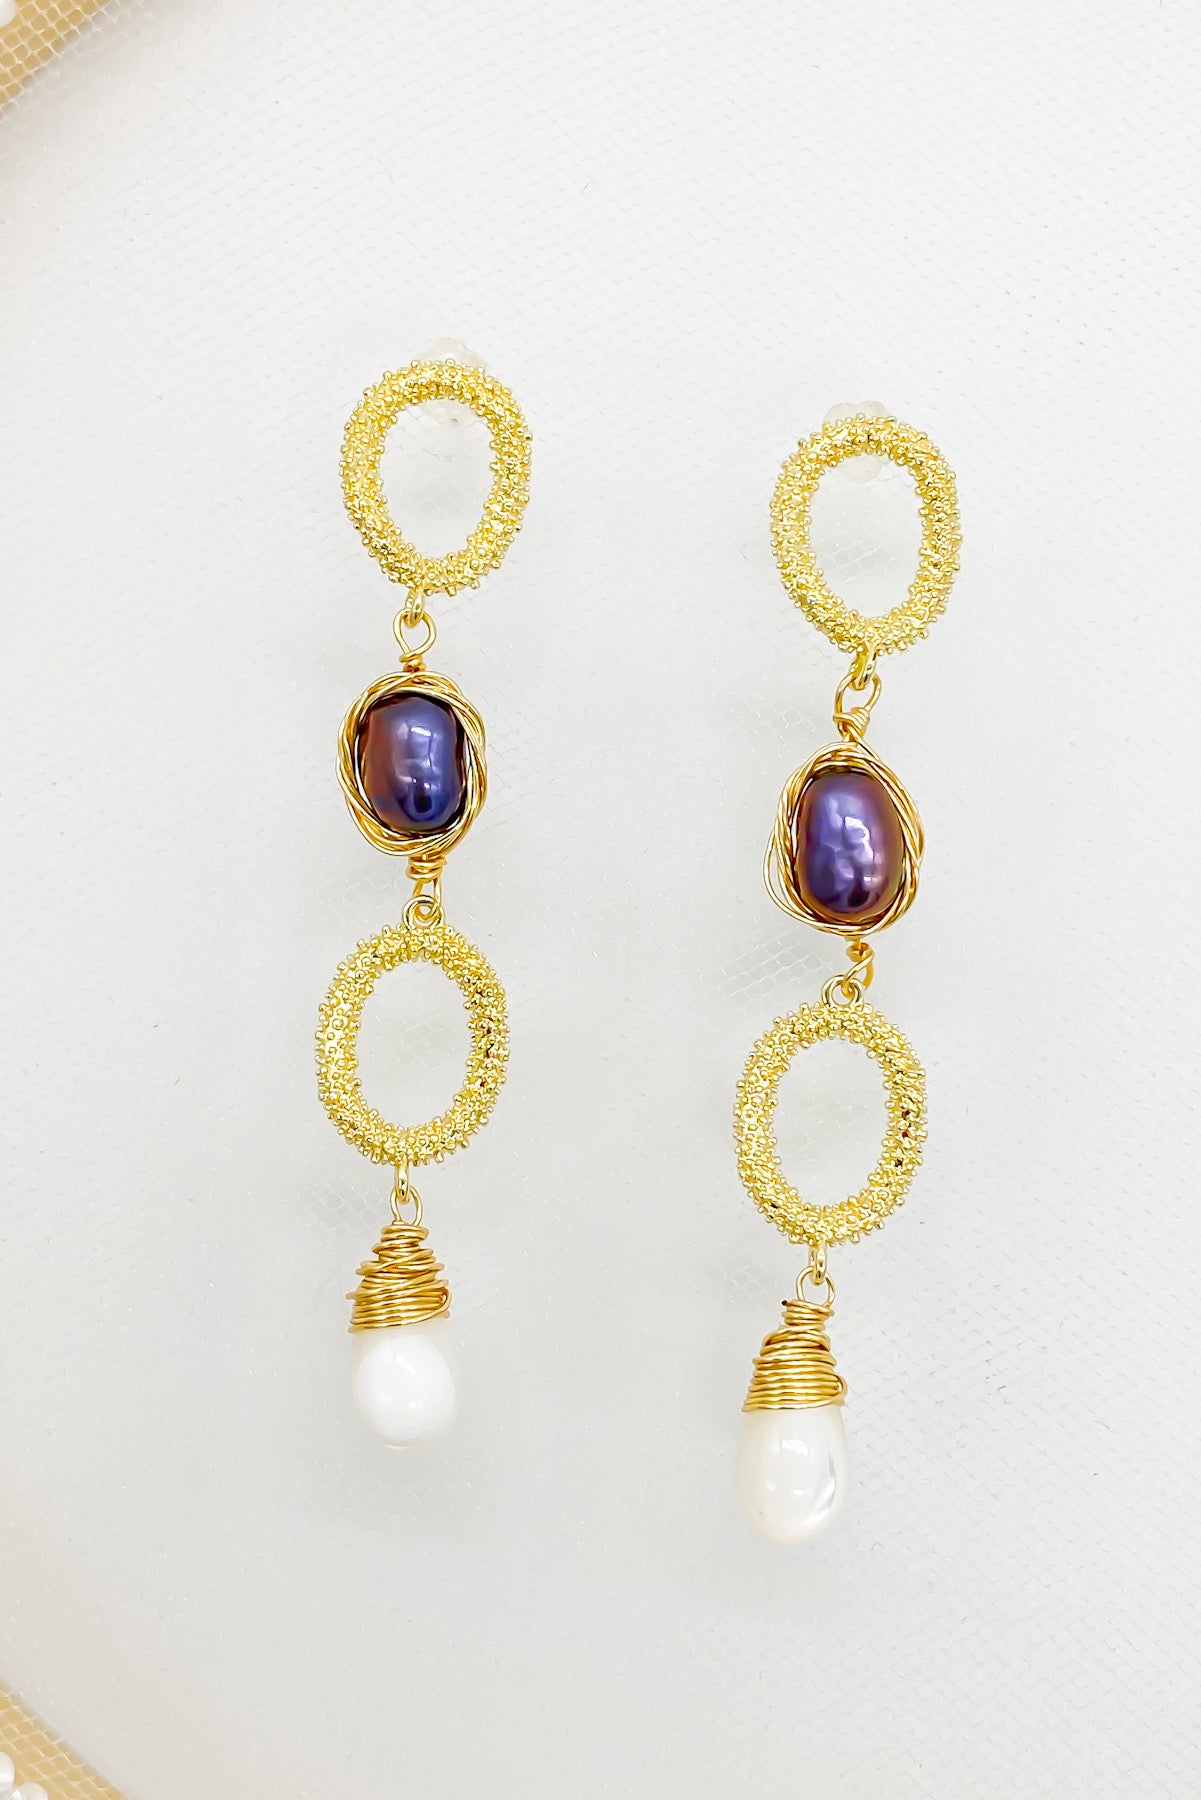 SKYE San Francisco Shop Chic Modern Elegant Classy Women Jewelry French Parisian Minimalist Priscille Gold Pearl Drop Earrings 4